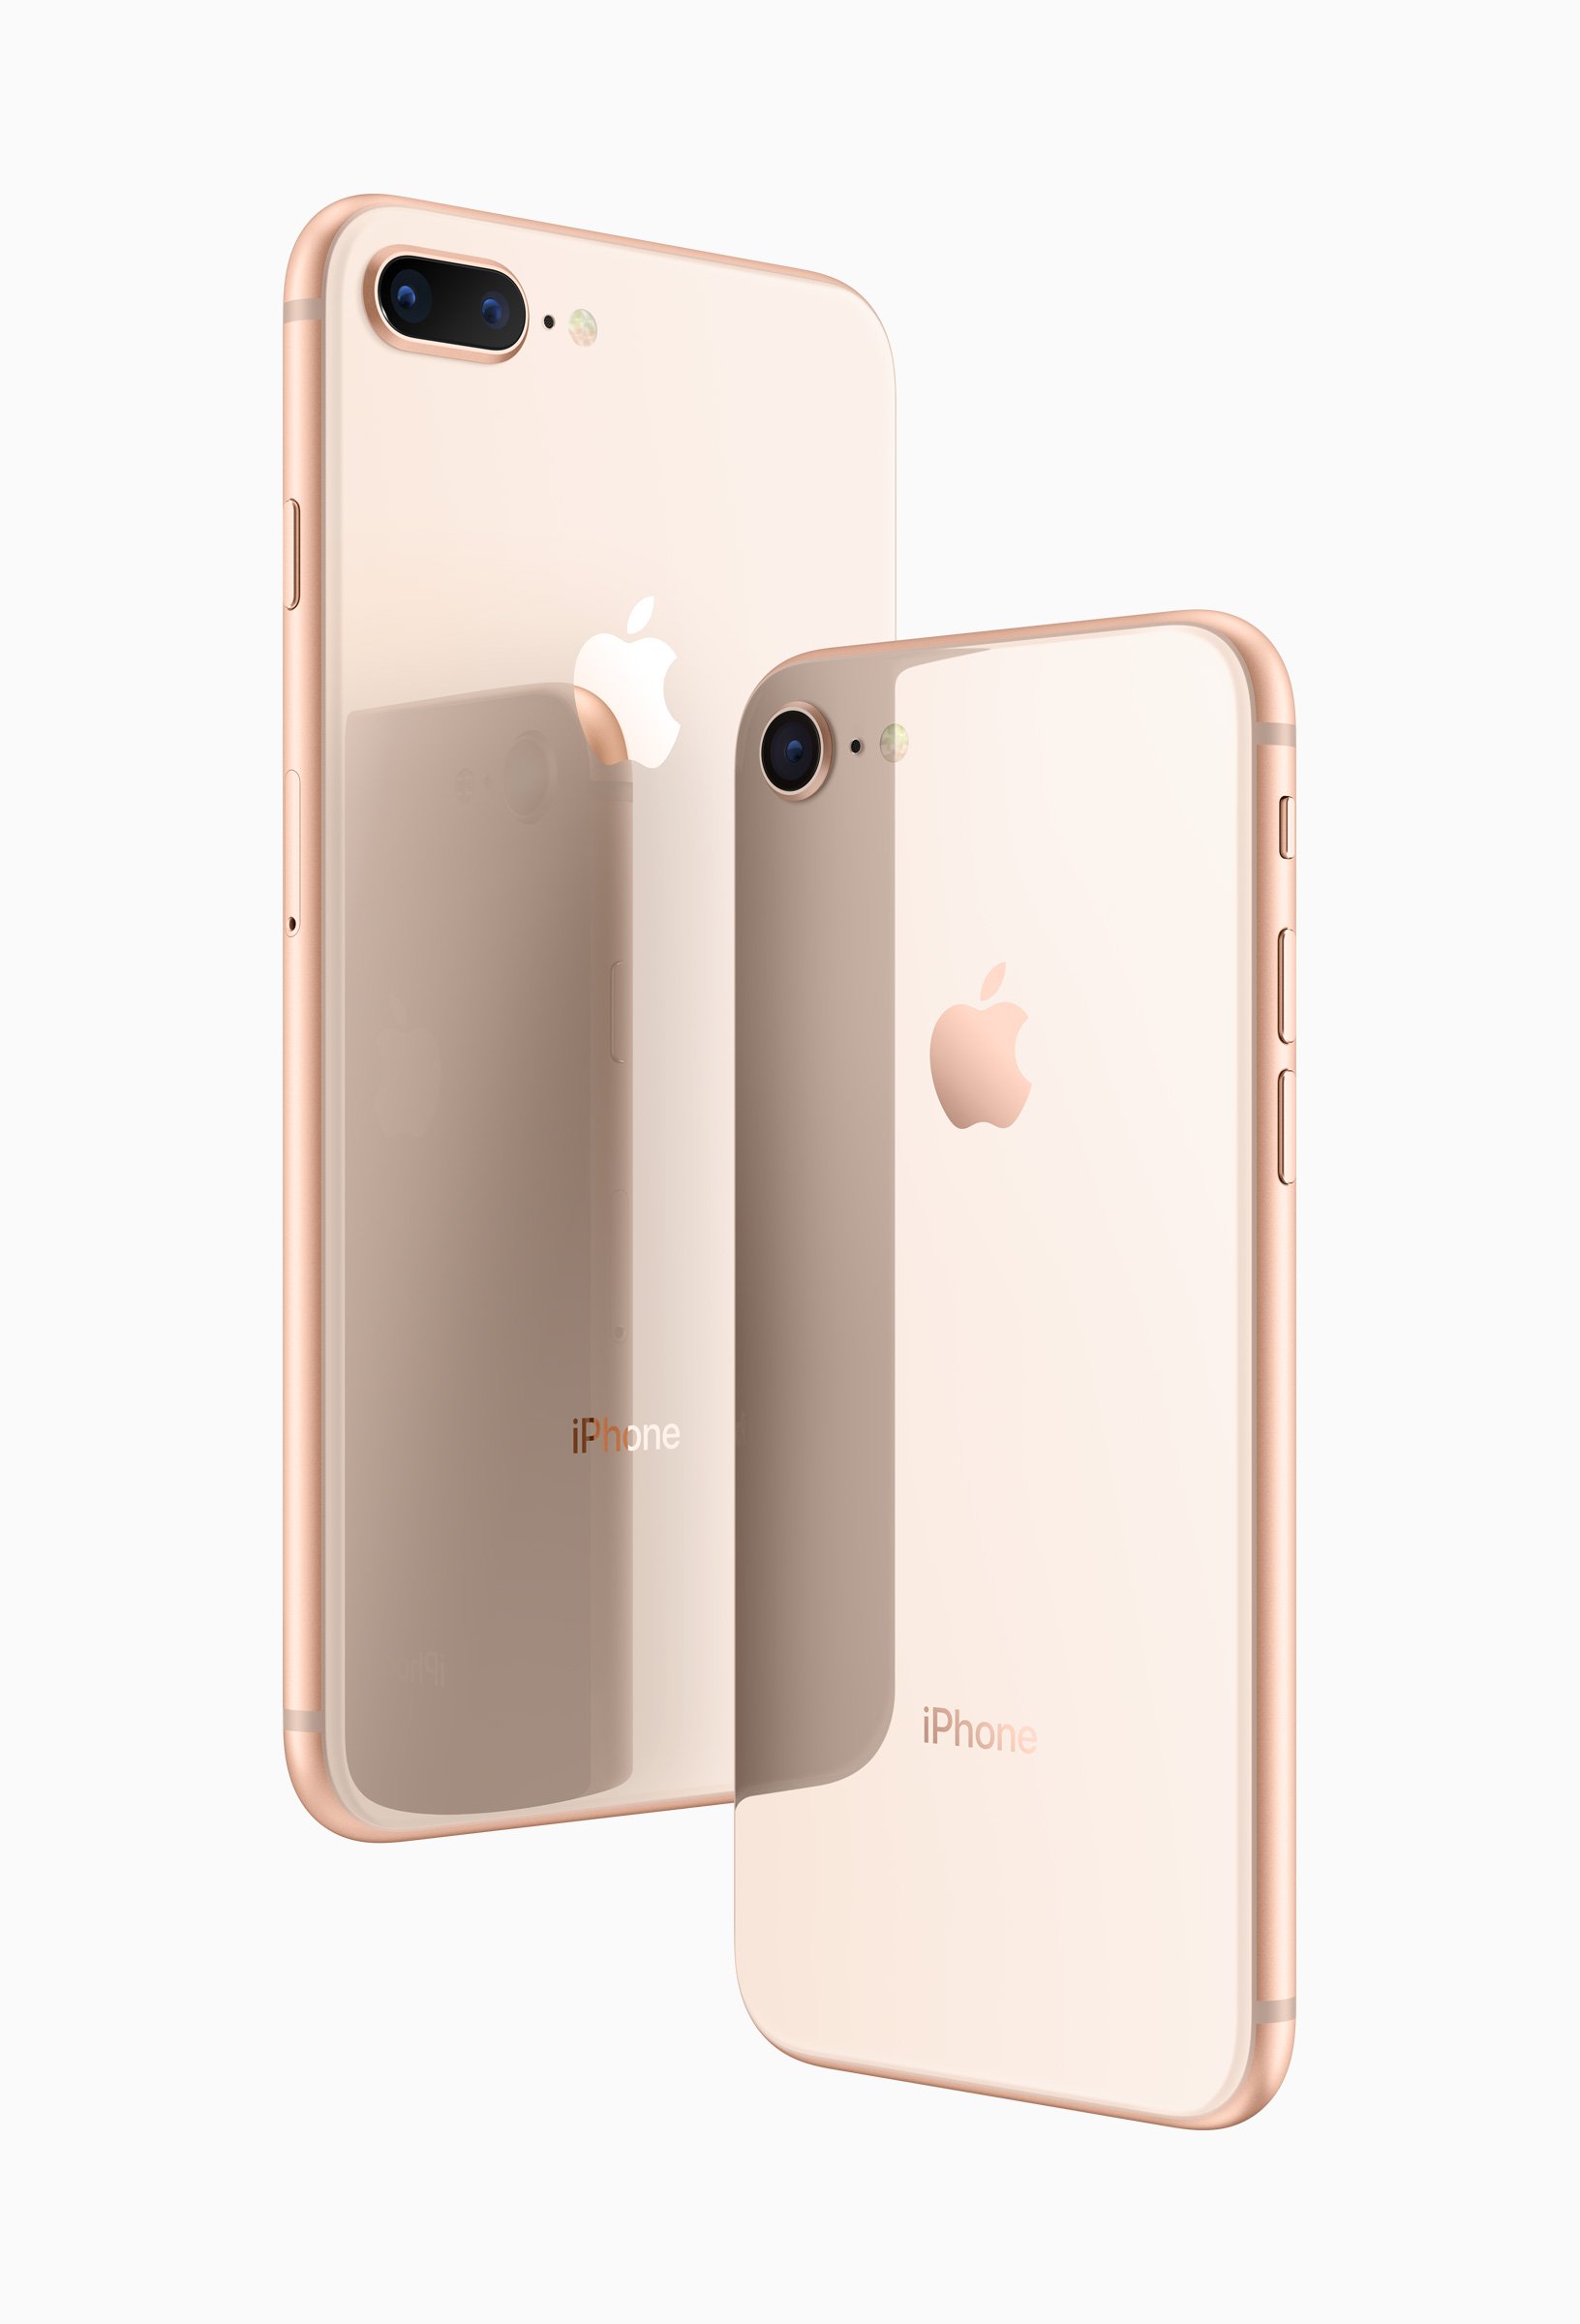 Apple iPhone 8 Plus 256GB Silver – Mua bán sửa chữa điện thoại Smartphone –  Củ Chi APPLE